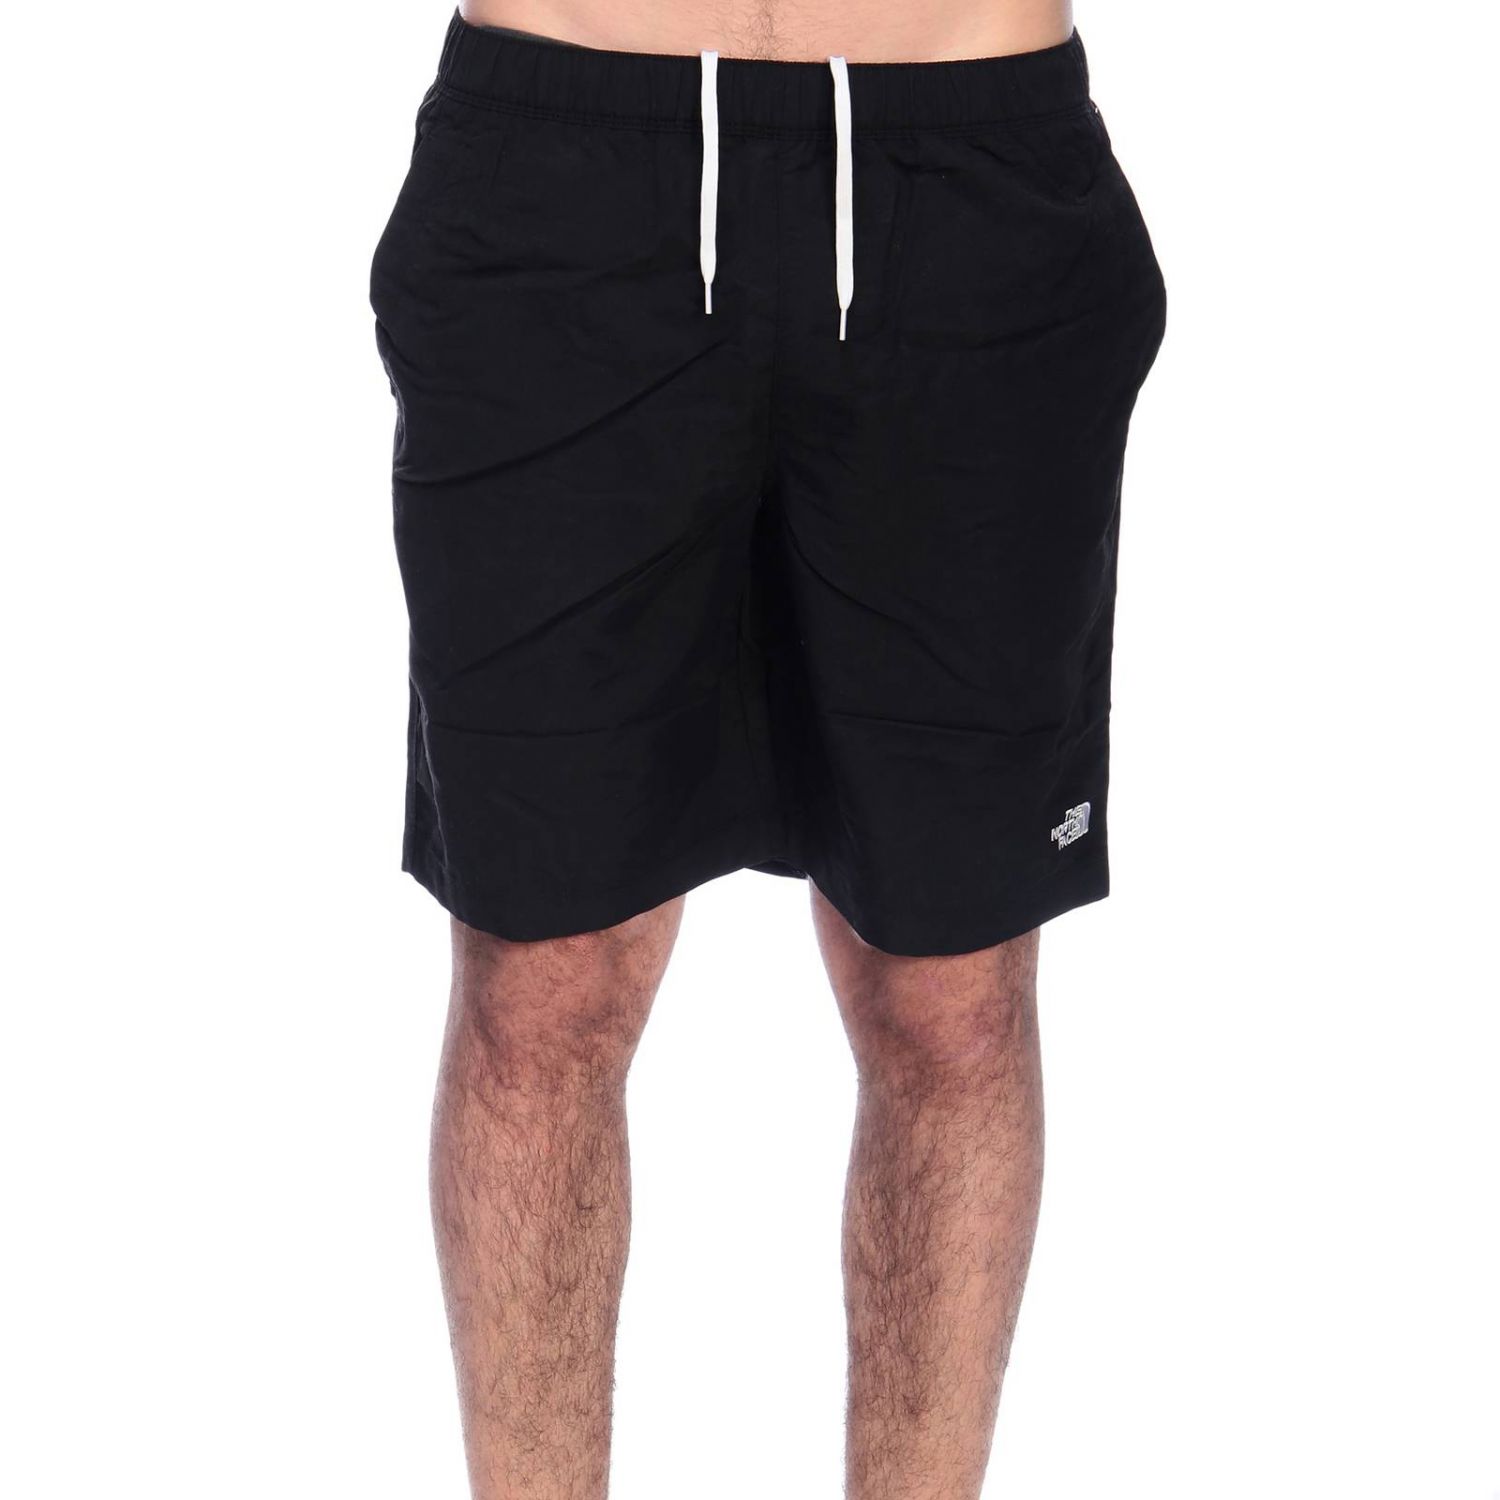 North Face Outlet: Bermuda shorts men 